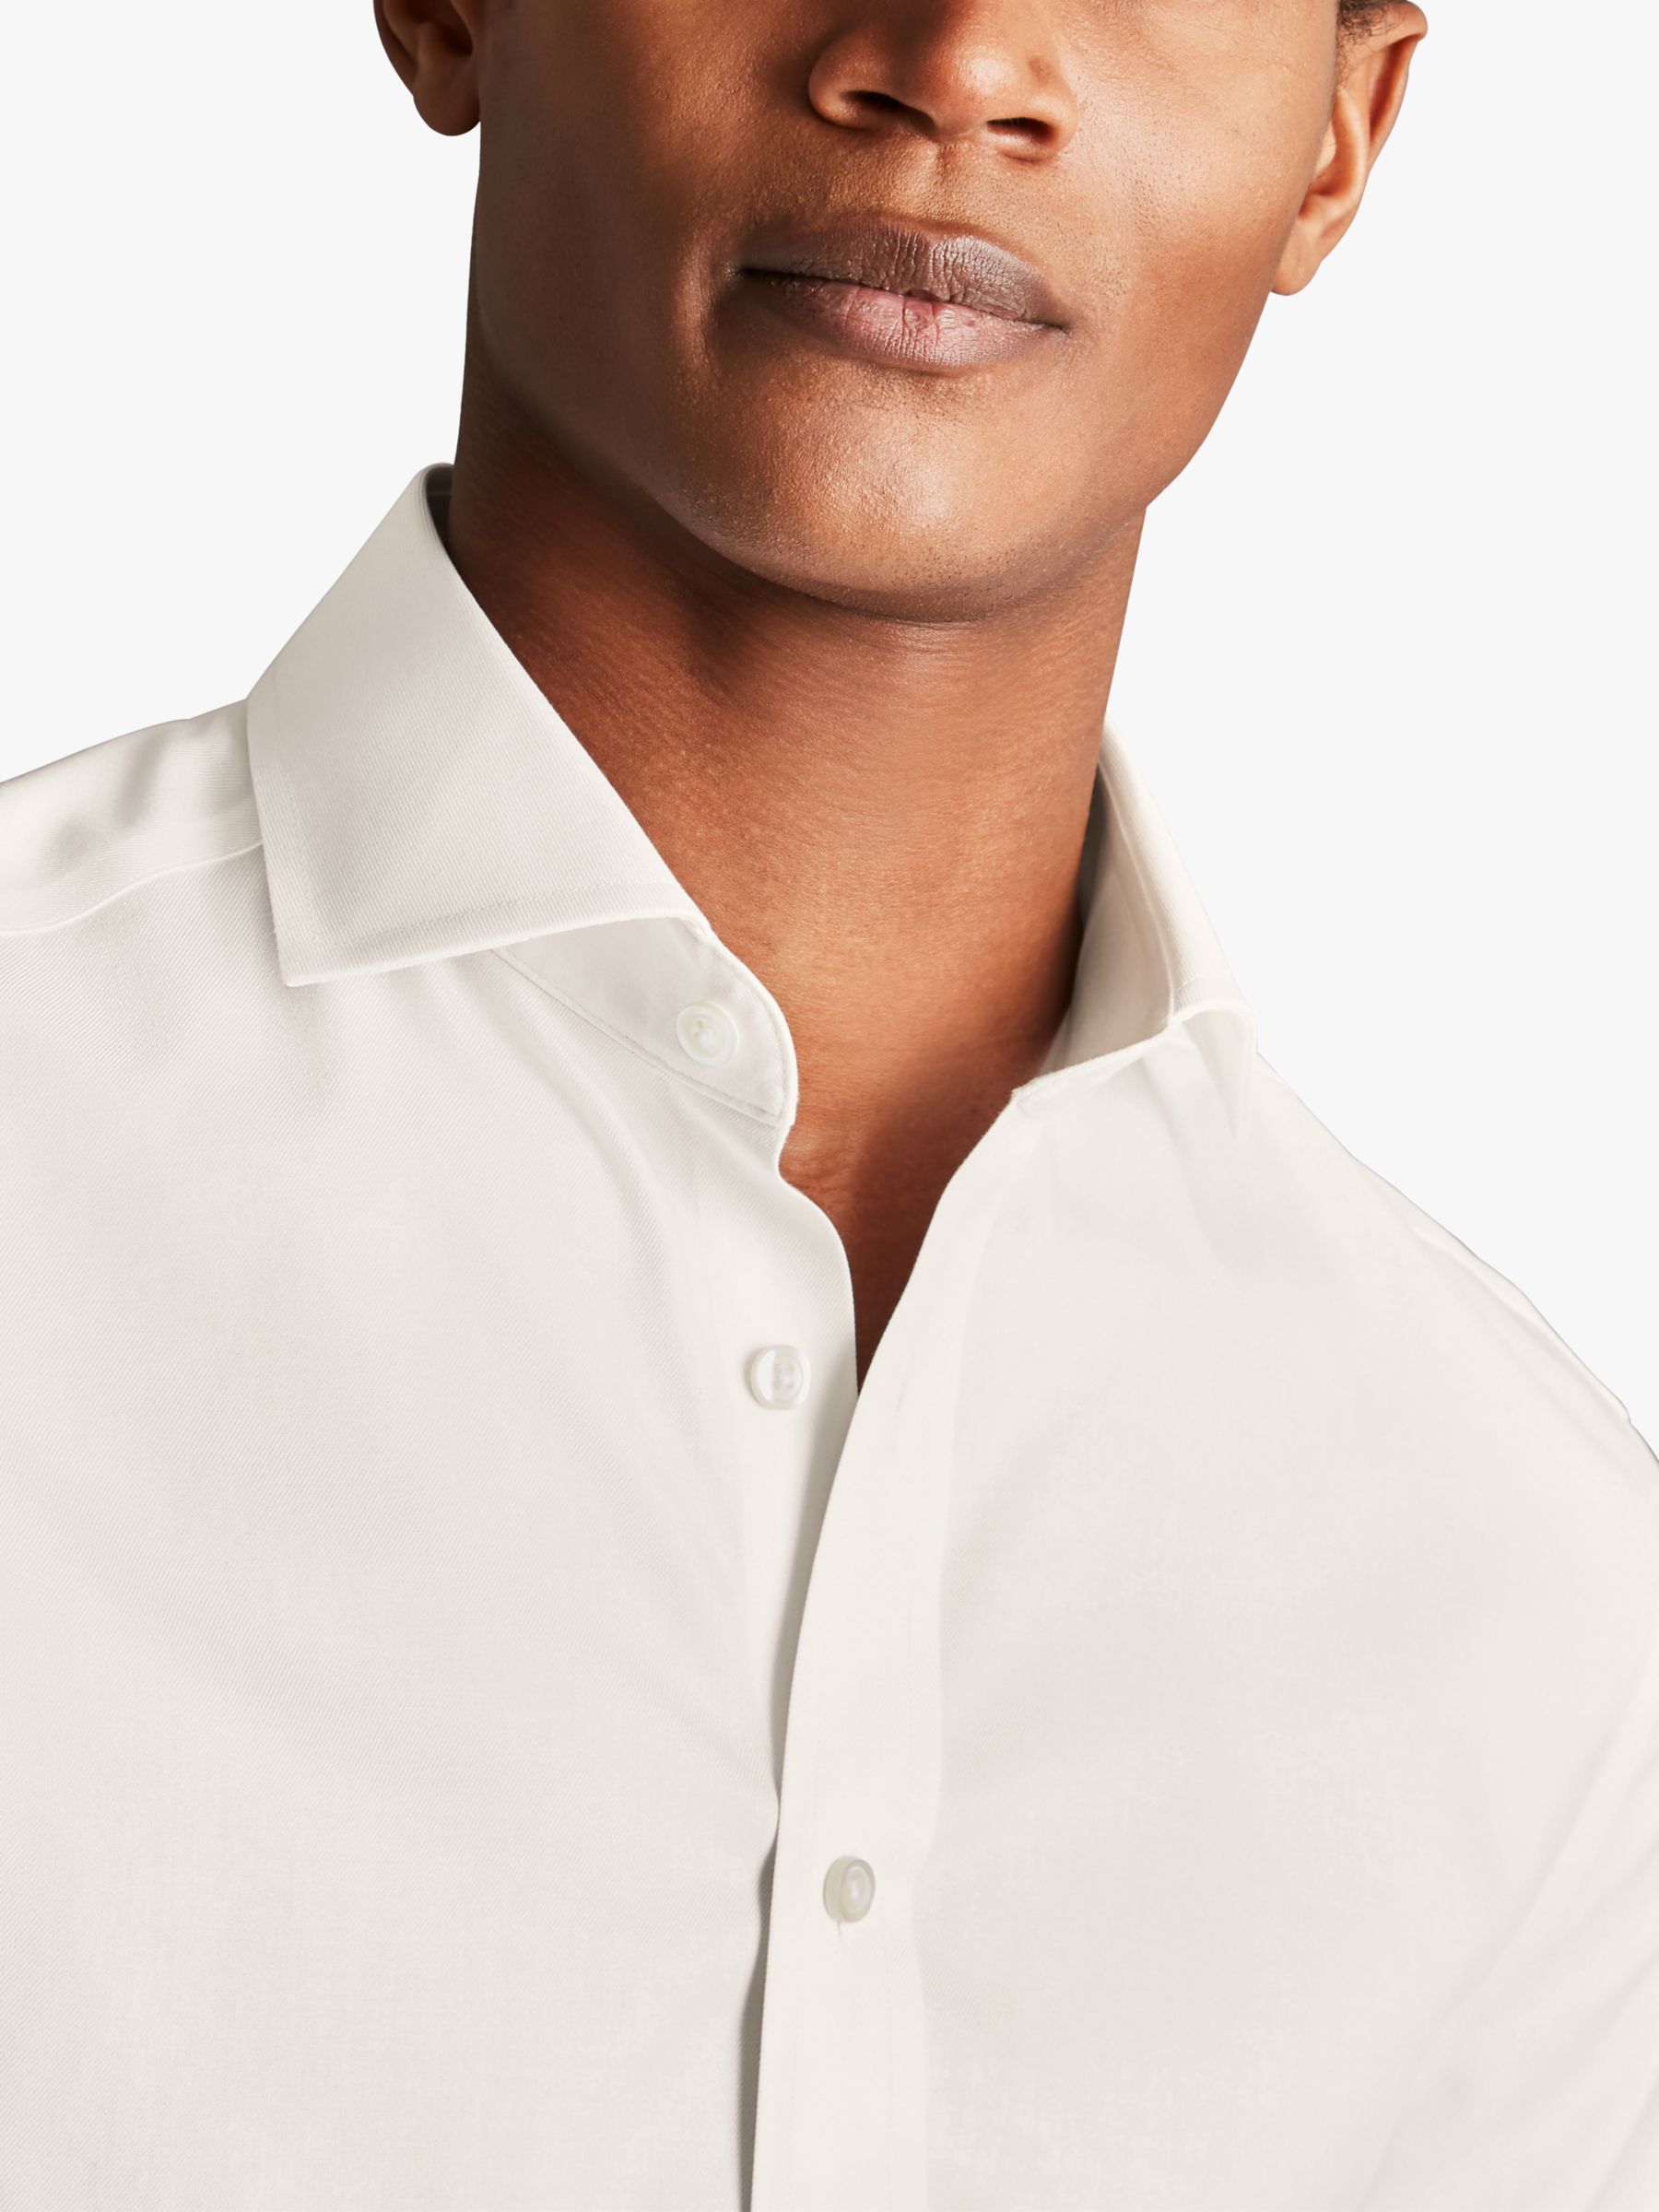 Charles Tyrwhitt Cotton Single Cuff Shirt, Ivory, 14.5